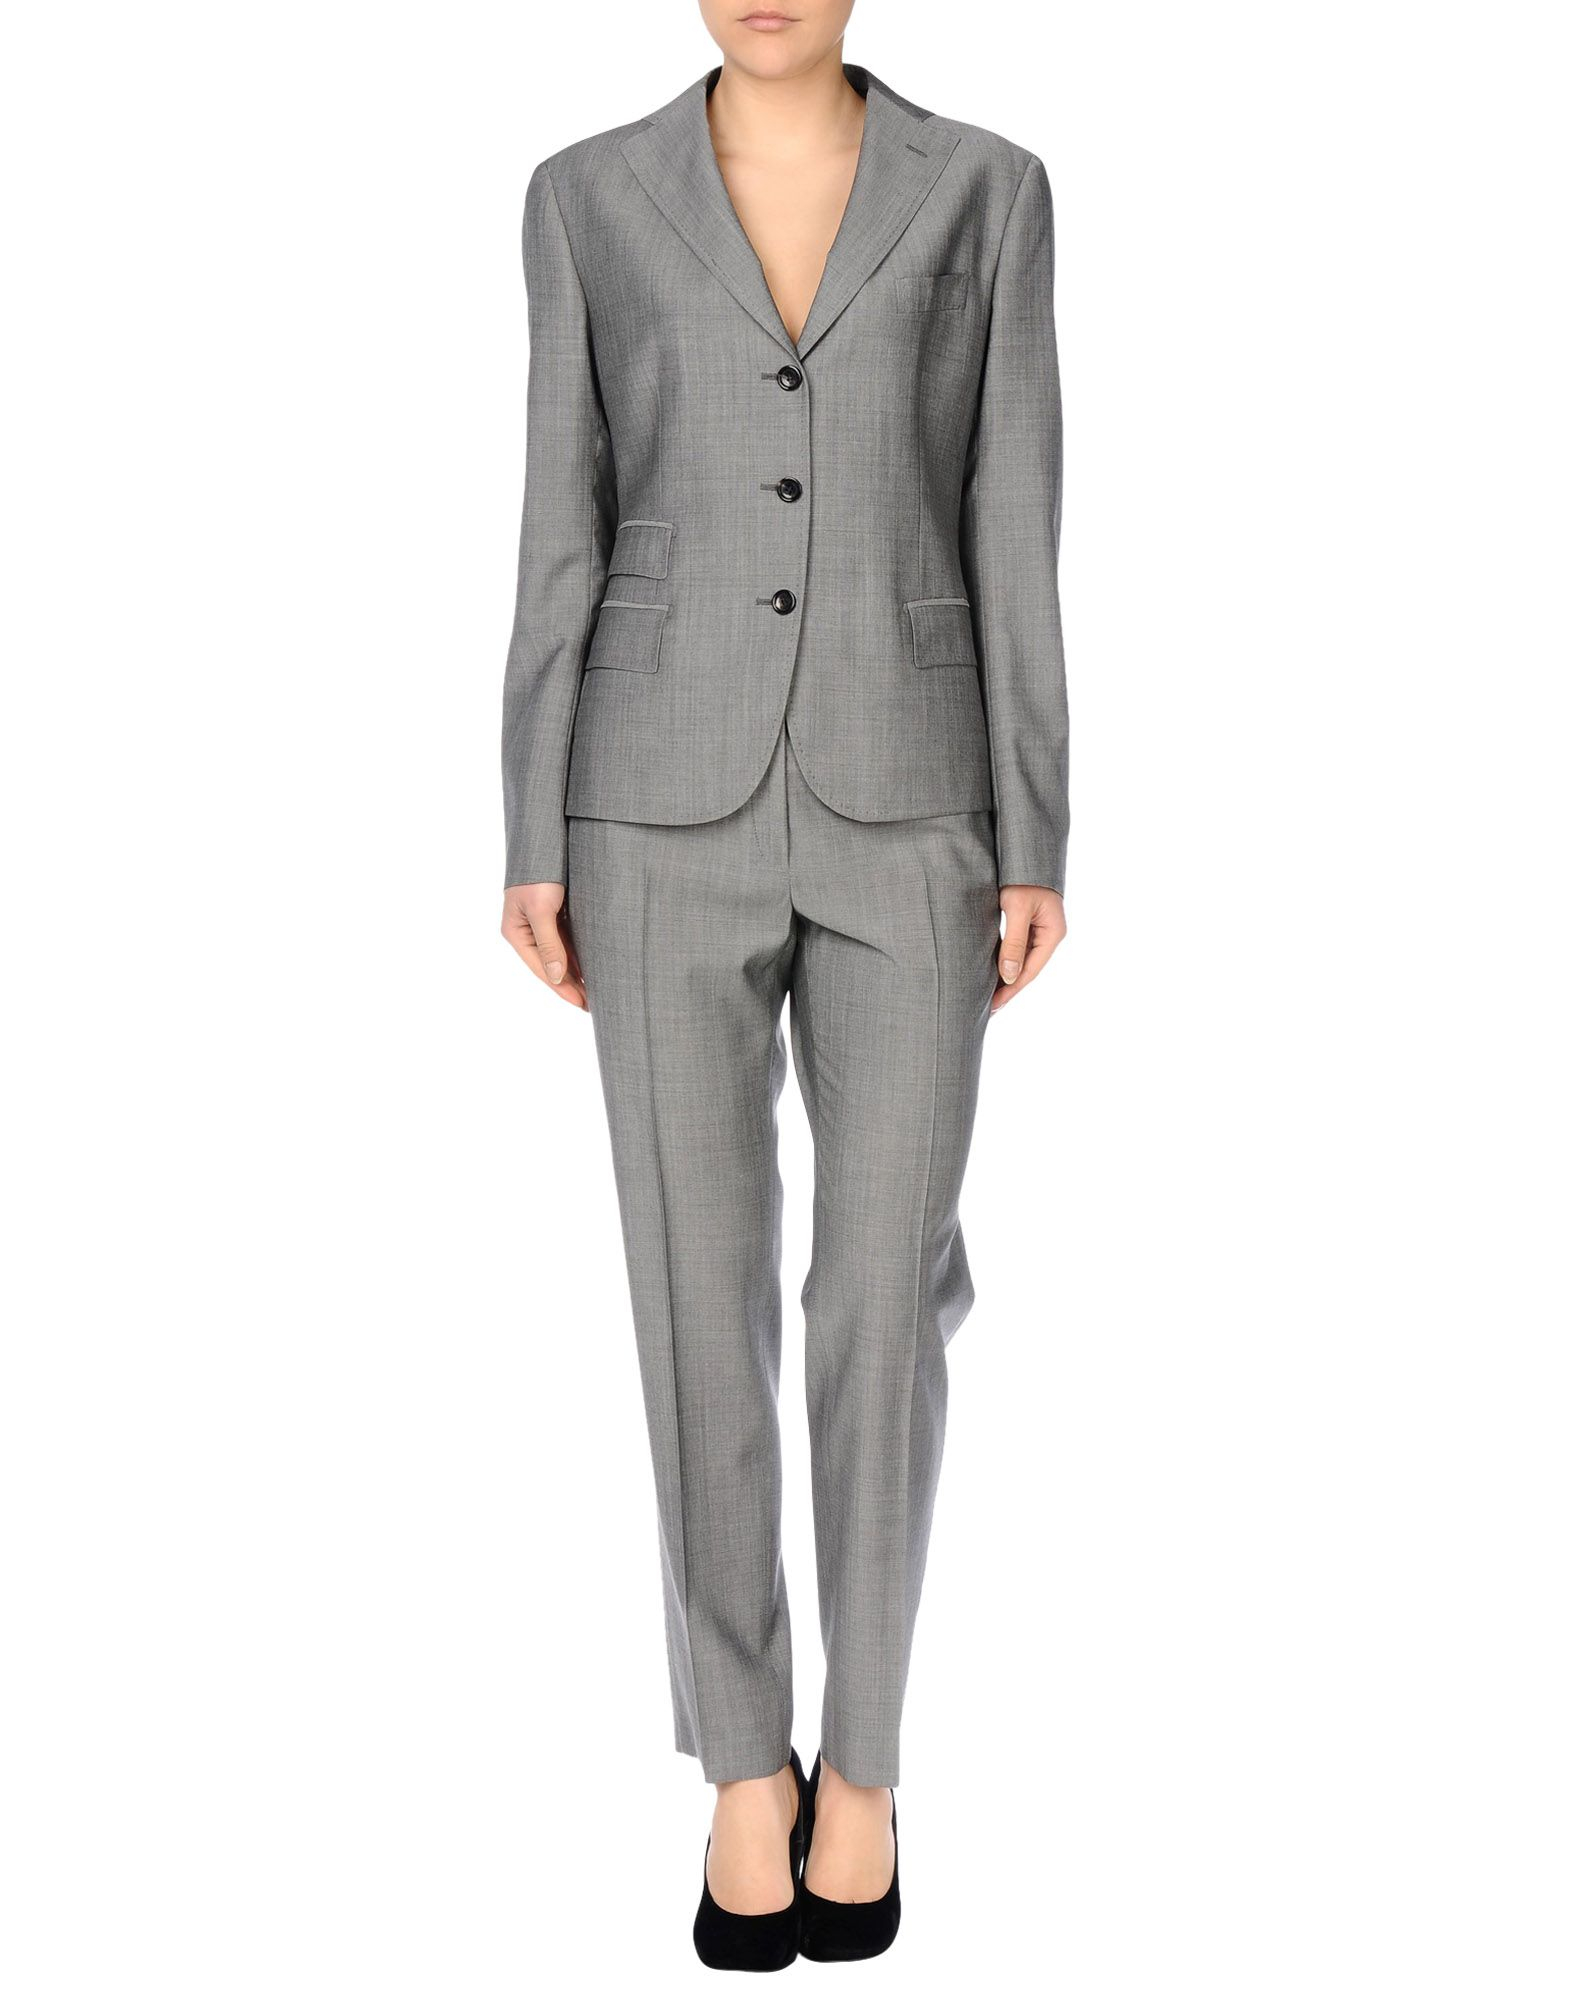 Aliexpress.com : Buy Womens Formal Work Suit Pants Black